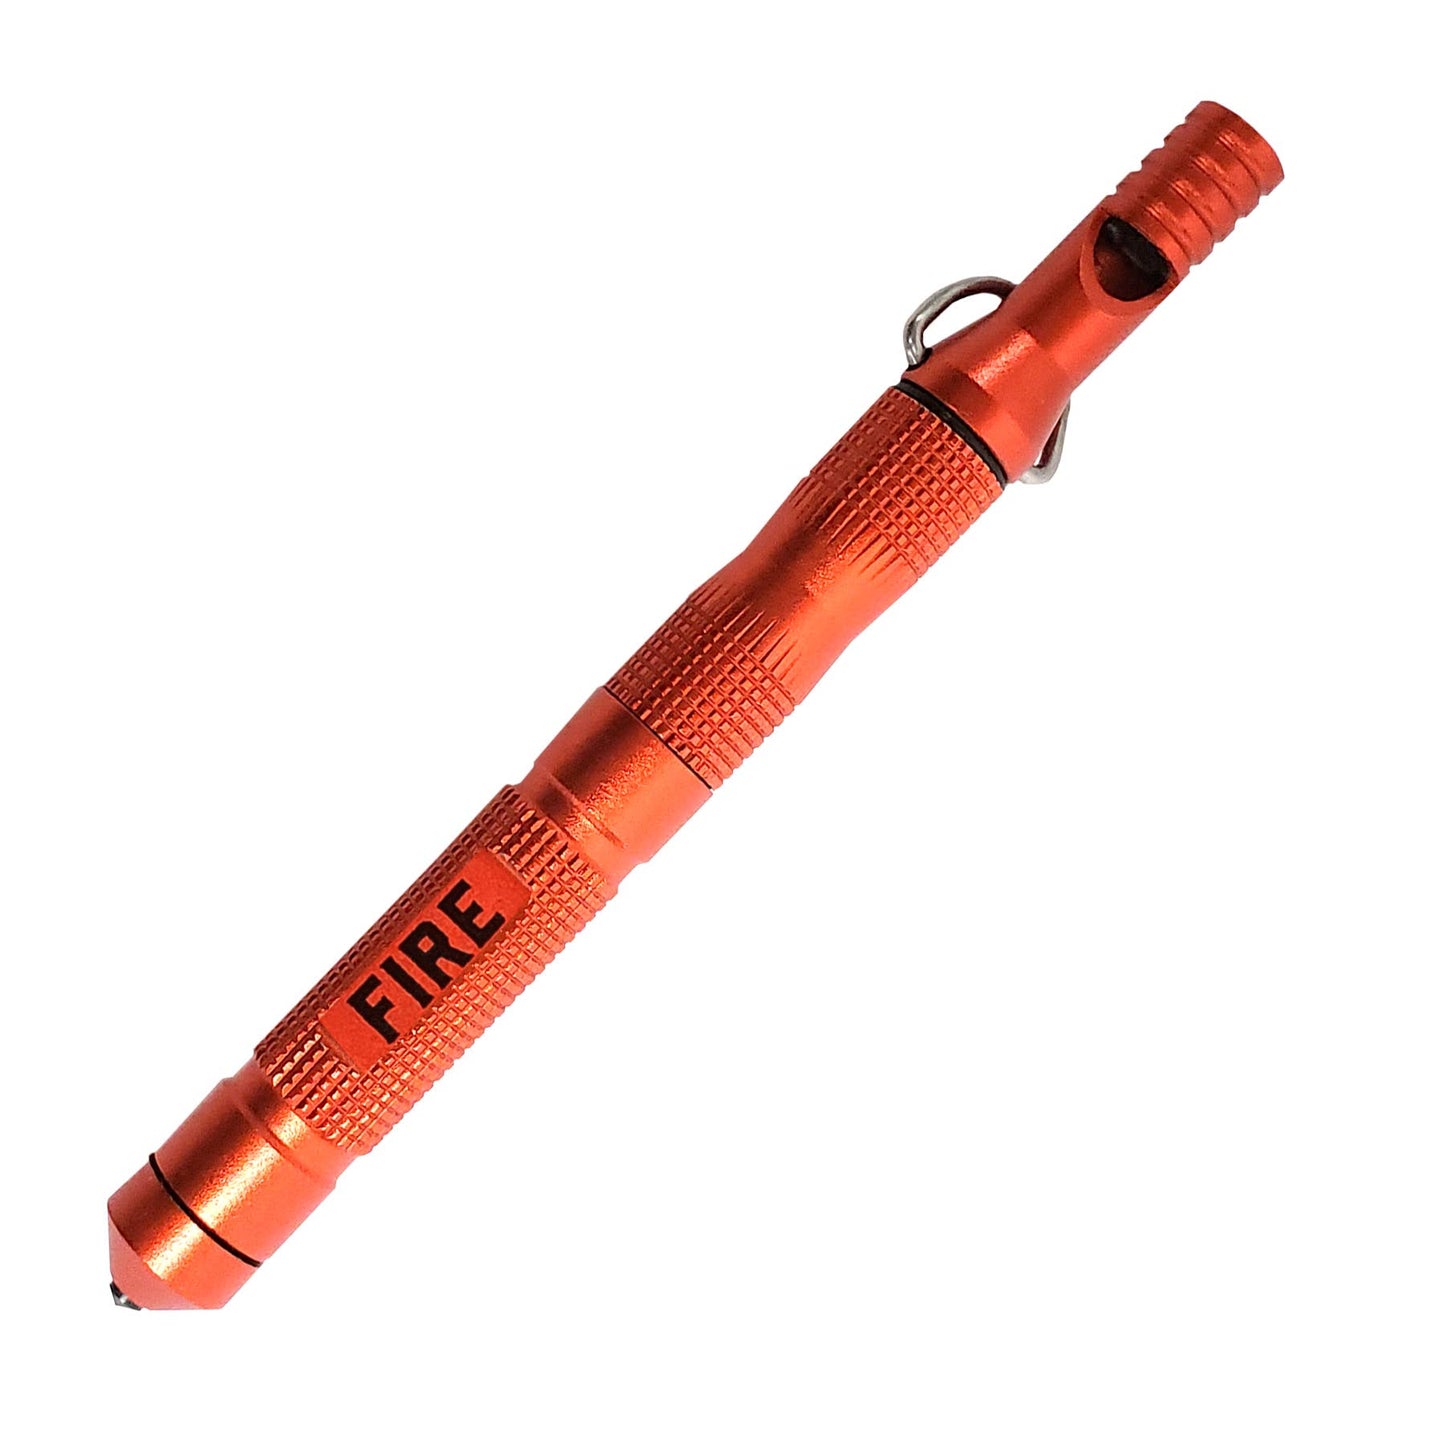 Tool - Pocket Fire Starter Multi-tool